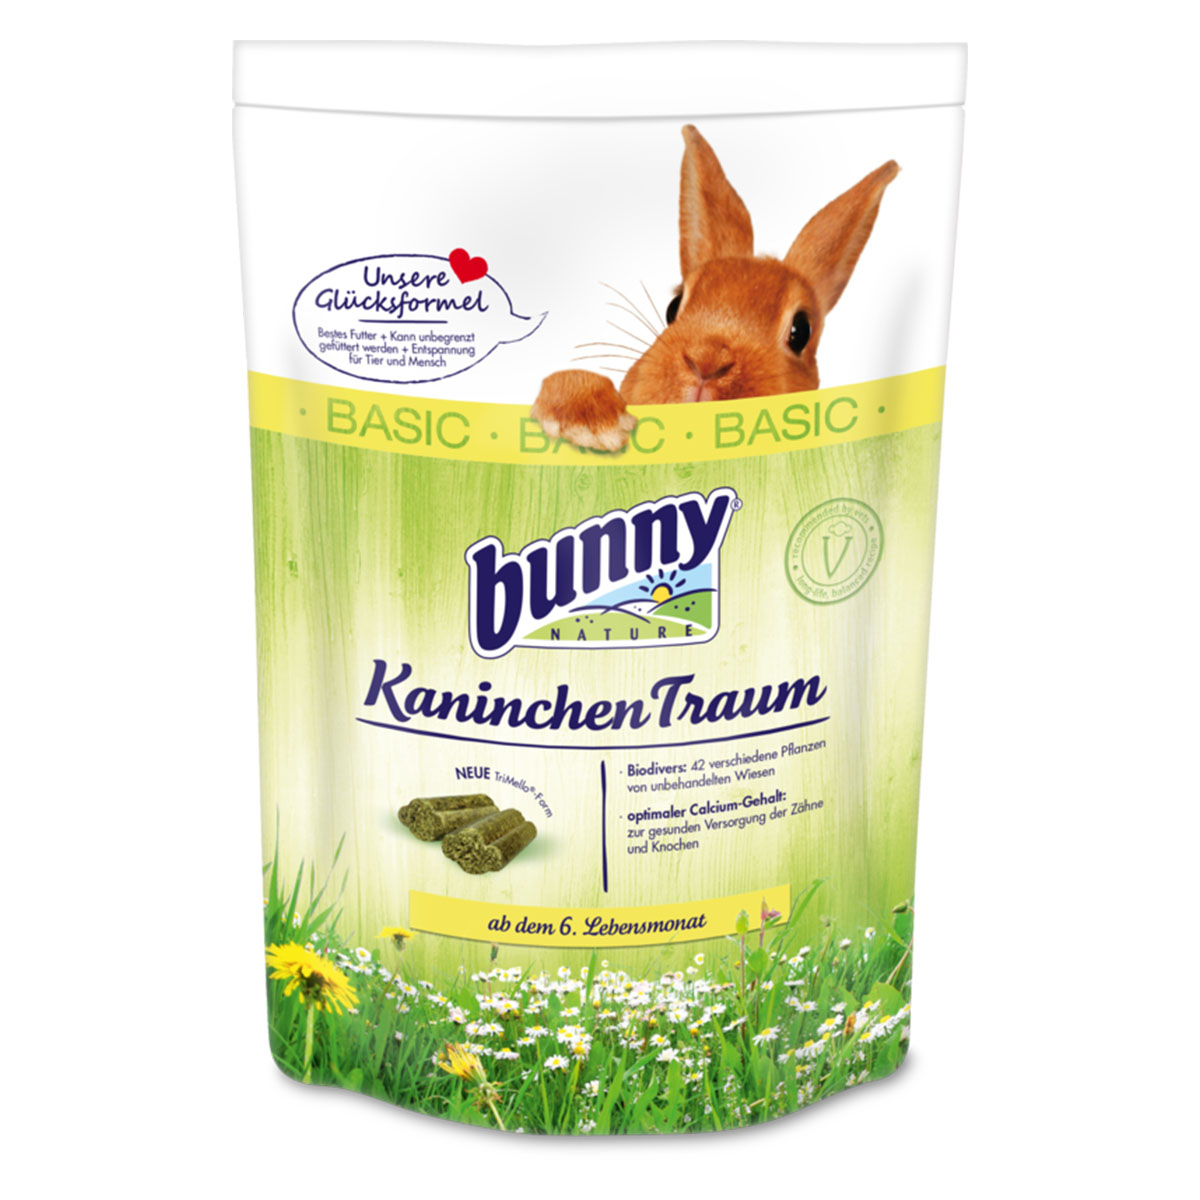 Bunny KaninchenTraum basic 1,5kg von bunny